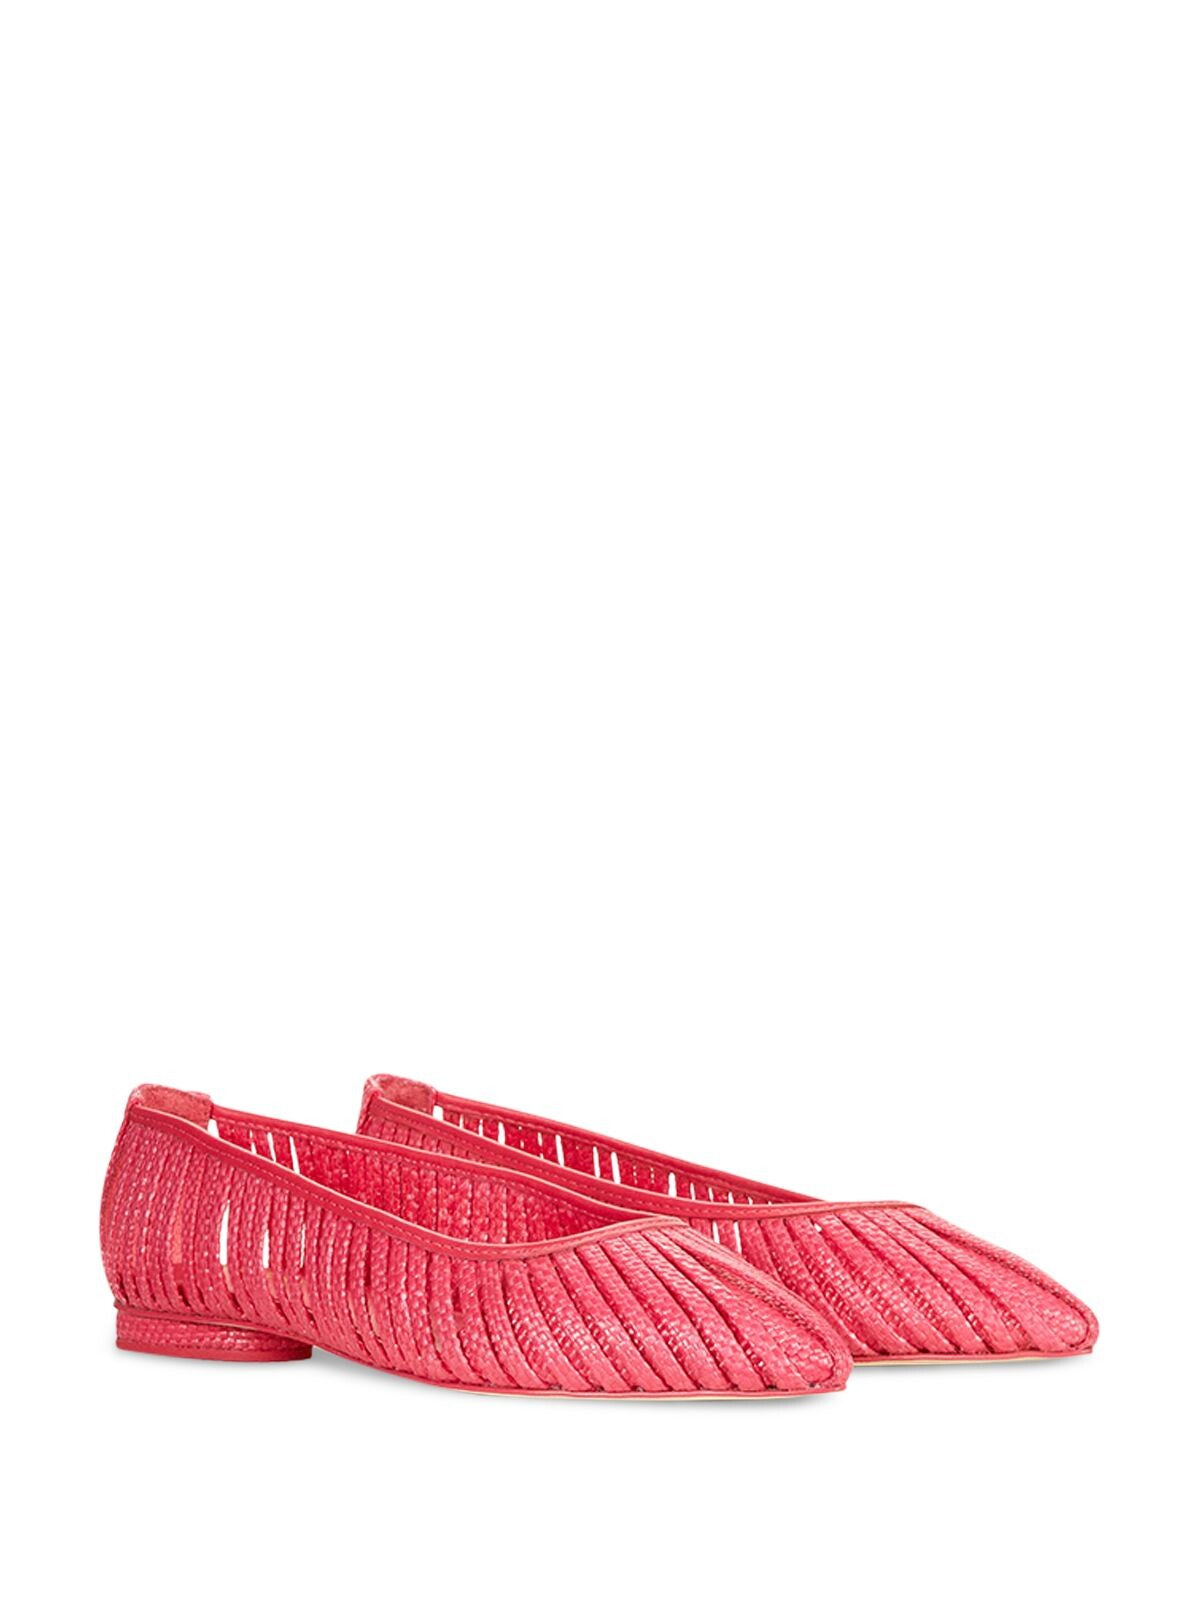 CULT GAIA Womens Camellia Pink Raffia Padded Leena Pointed Toe Slip On Flats Shoes 37.5